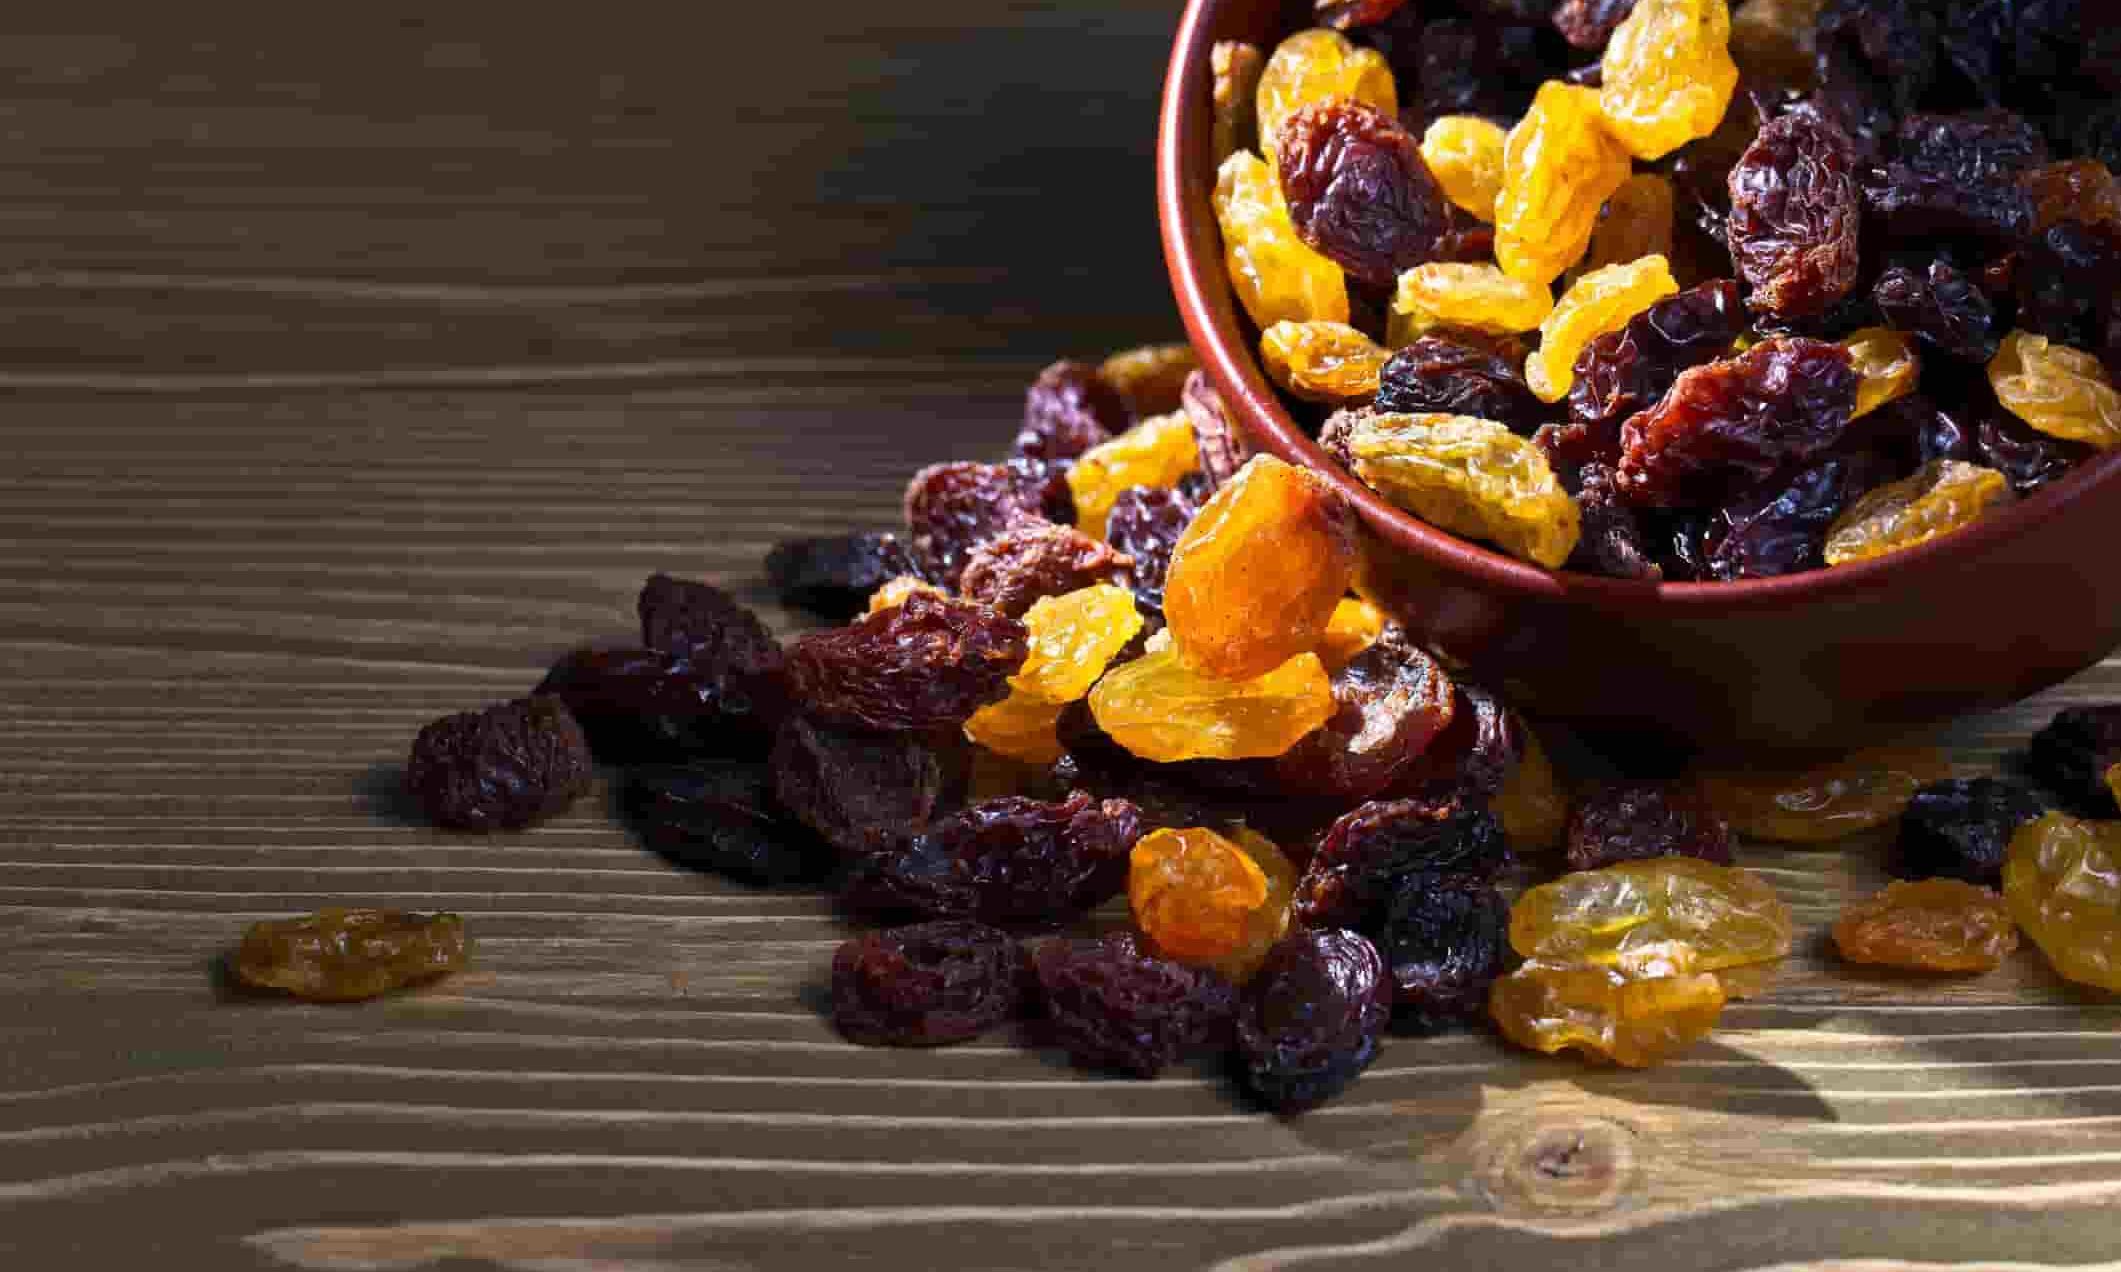  Buy Exporting Raisins | Selling All Types of Exporting Raisins At a Reasonable Price 